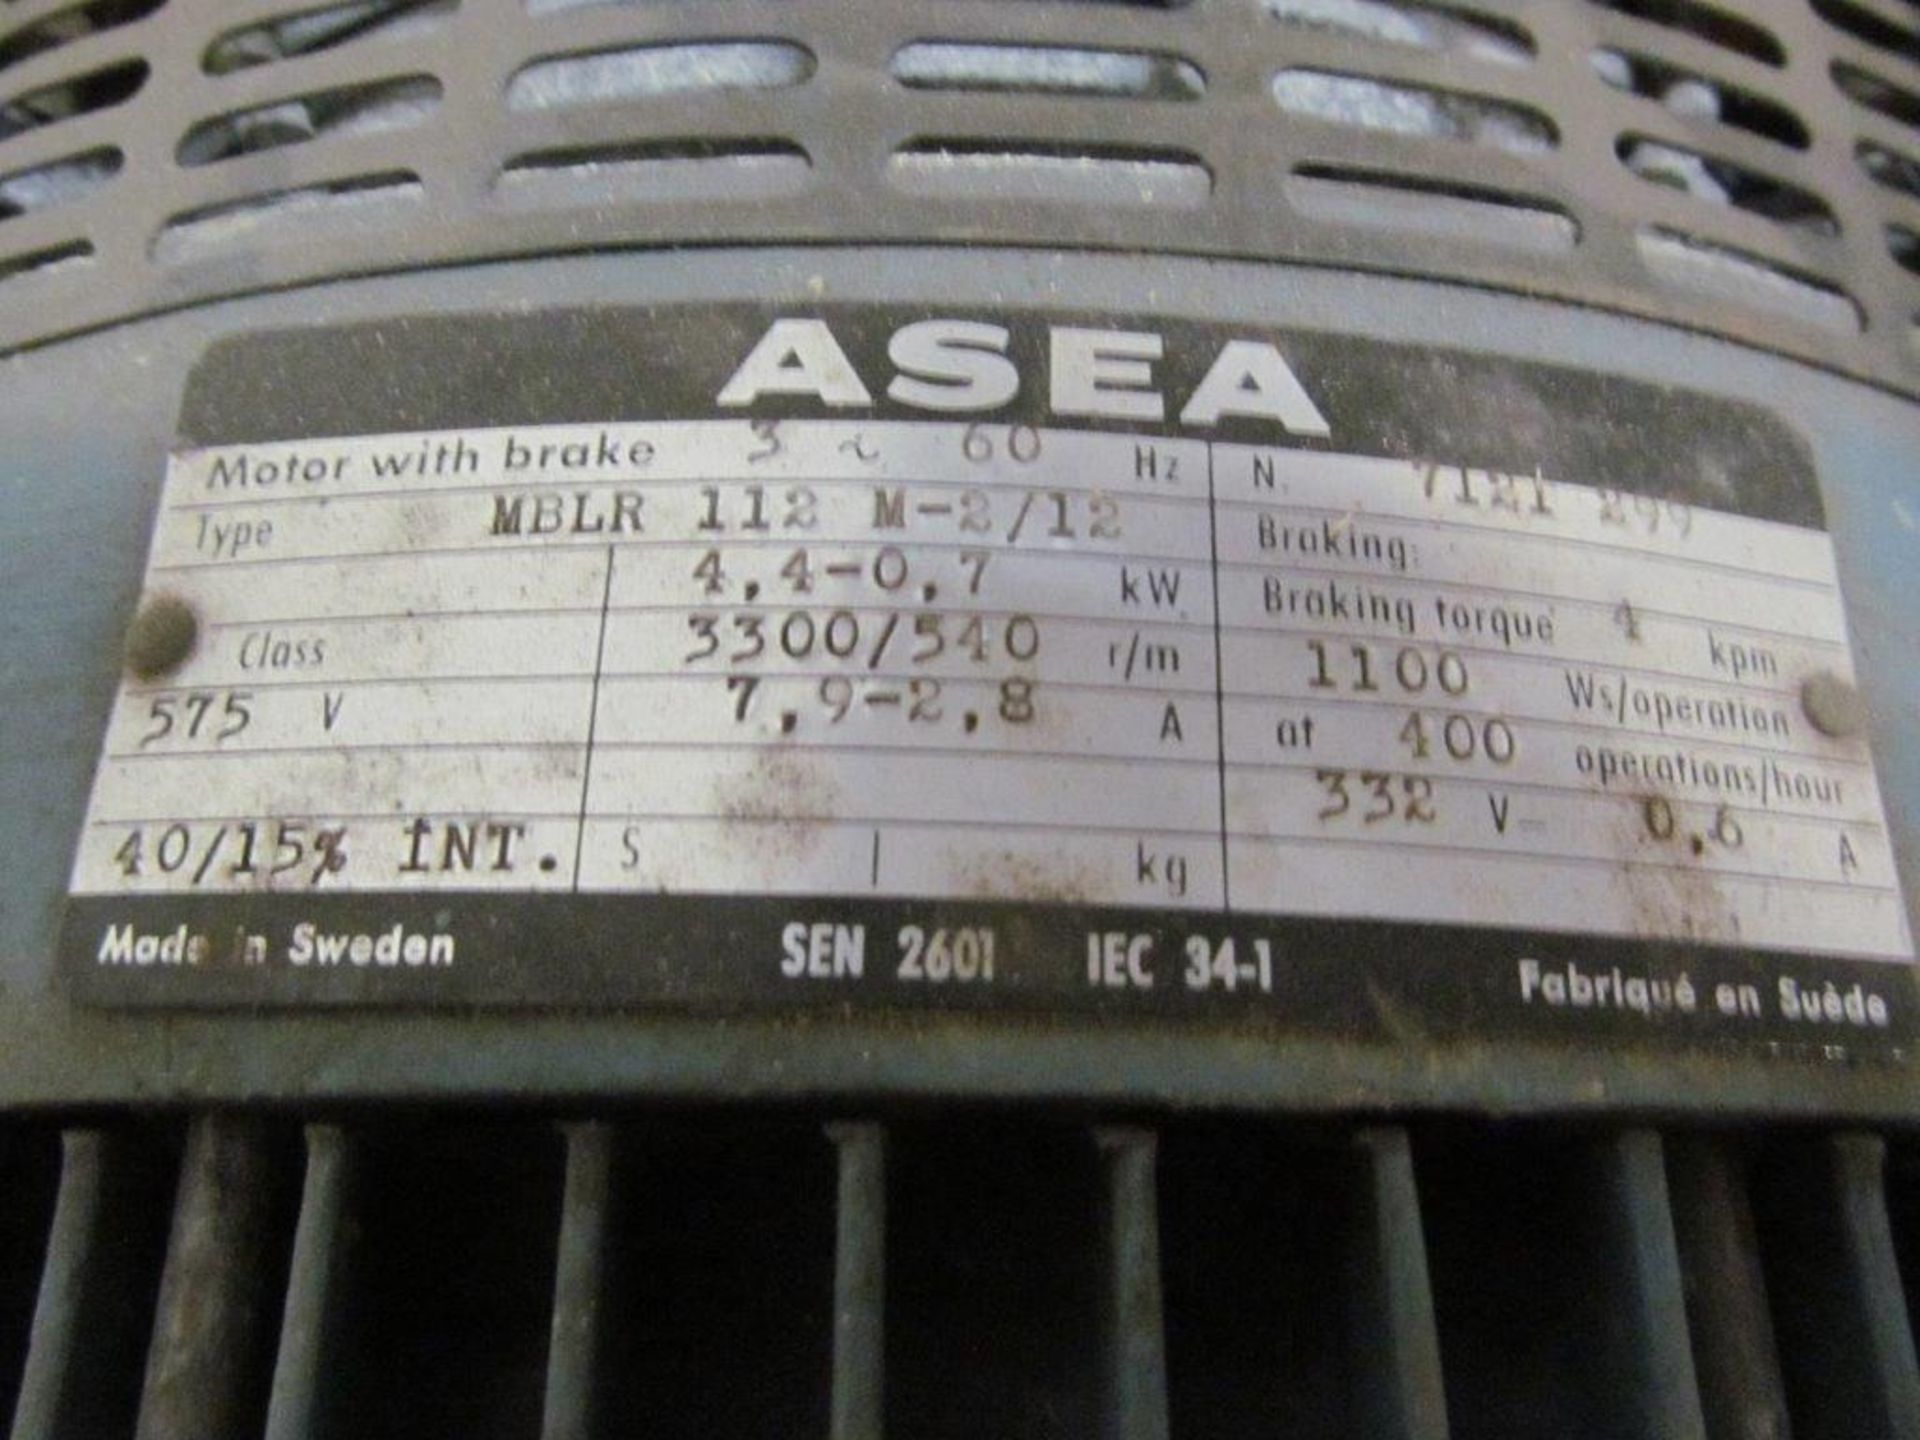 ASEA OVERHEAD HOIST, C/W PENDANT CONTROL, 6.3 TON CAPACITY, 575V/3PH/60C - Image 4 of 4